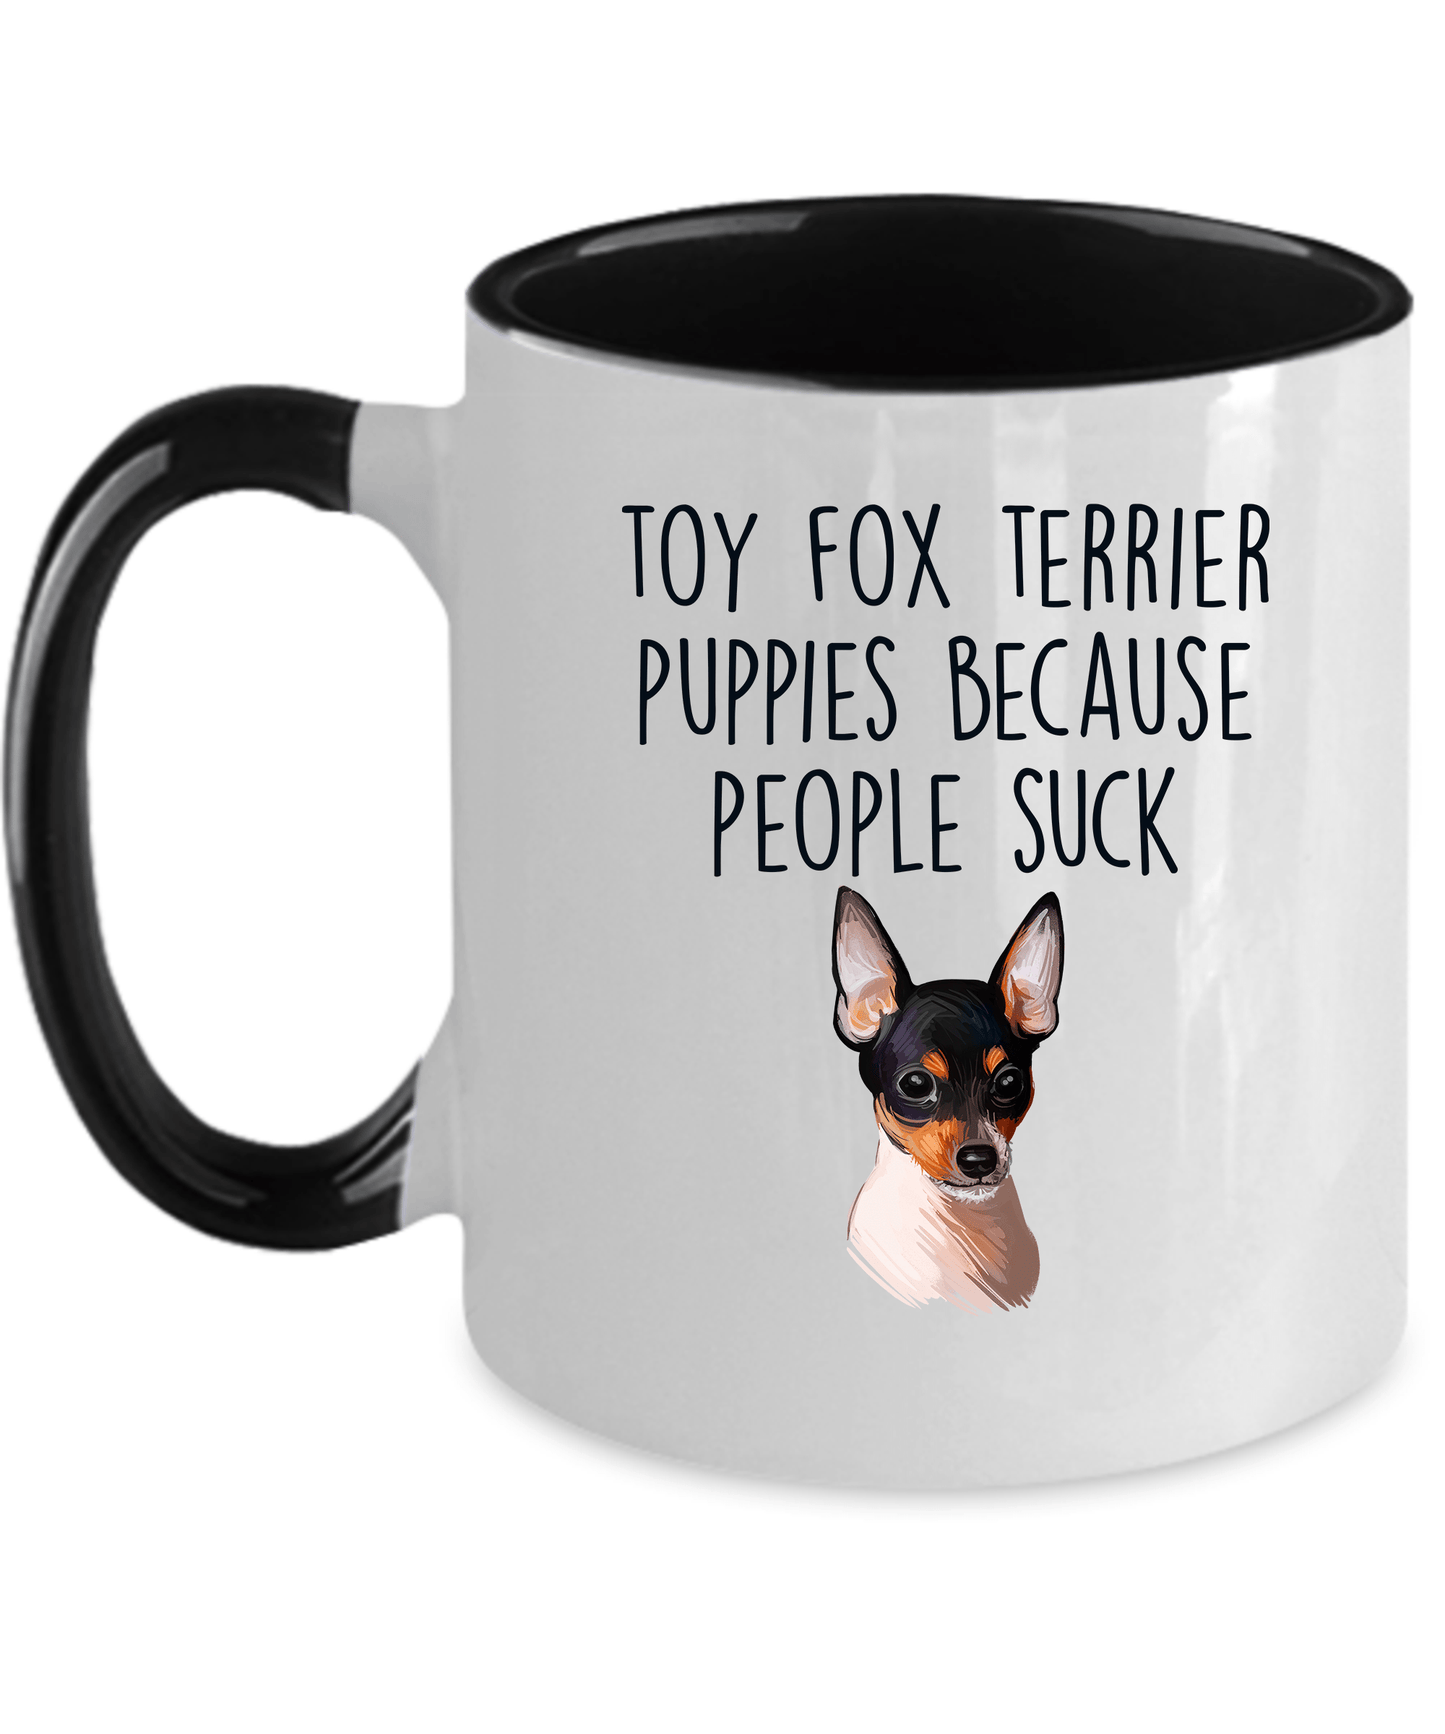 Toy Fox Terrier Puppies Because People Suck Coffee Mug